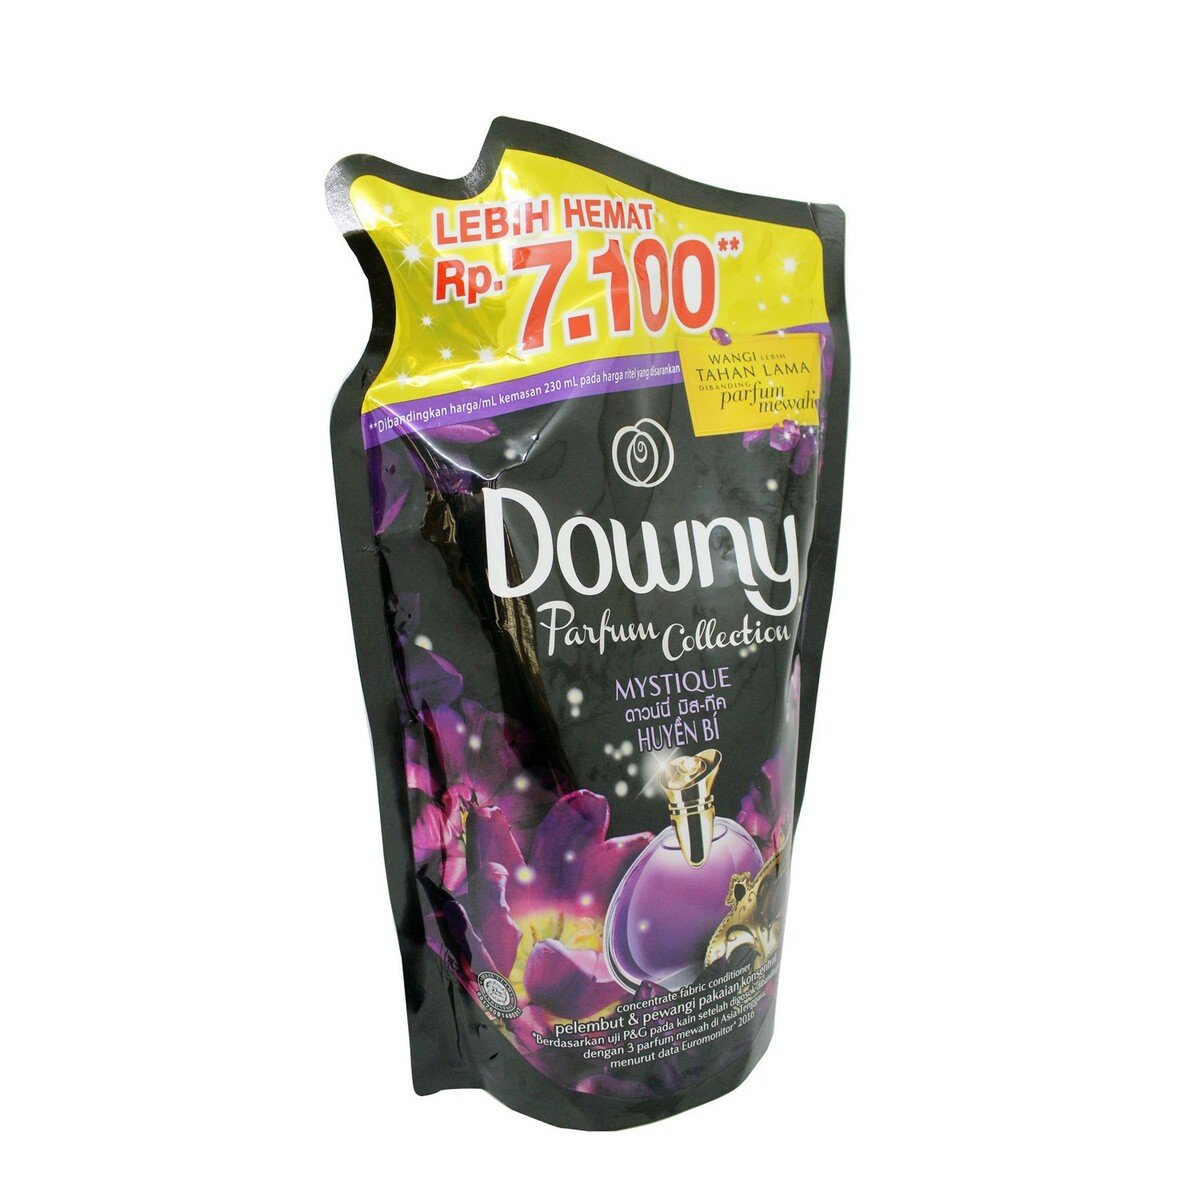 Downy Parfum Collection Mystique Pouch 950ml